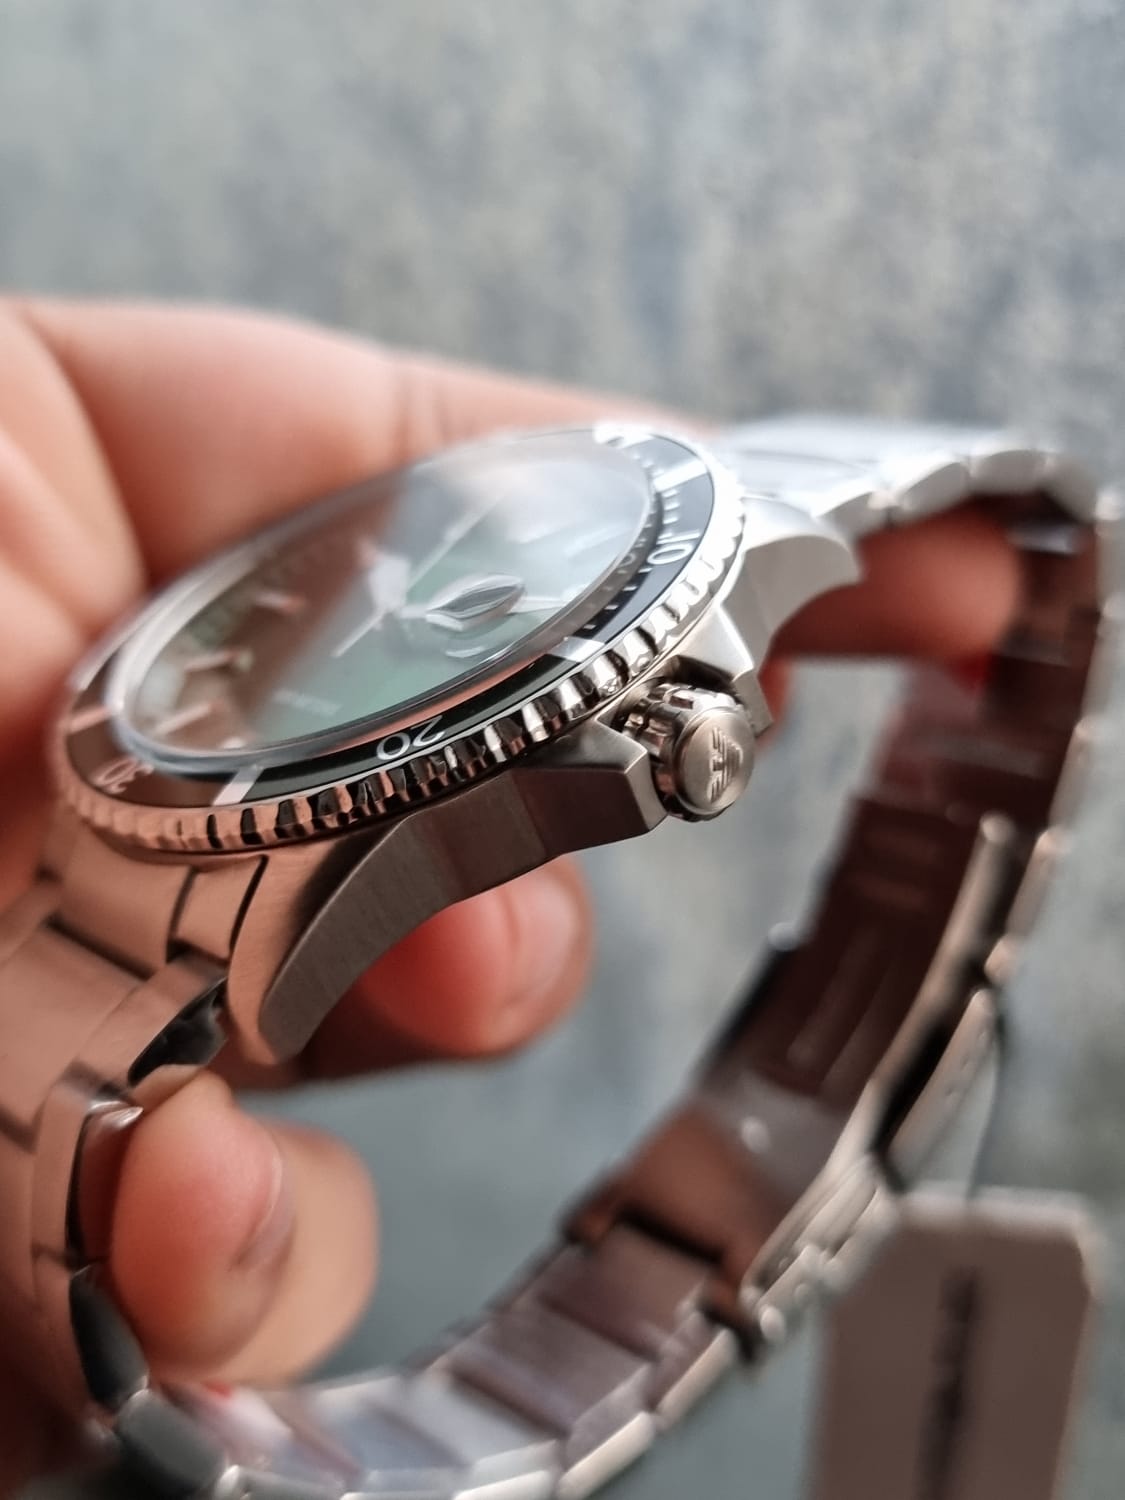 Emporio Armani Men\'s Chronograph Quartz Stainless Steel Watch AR11338